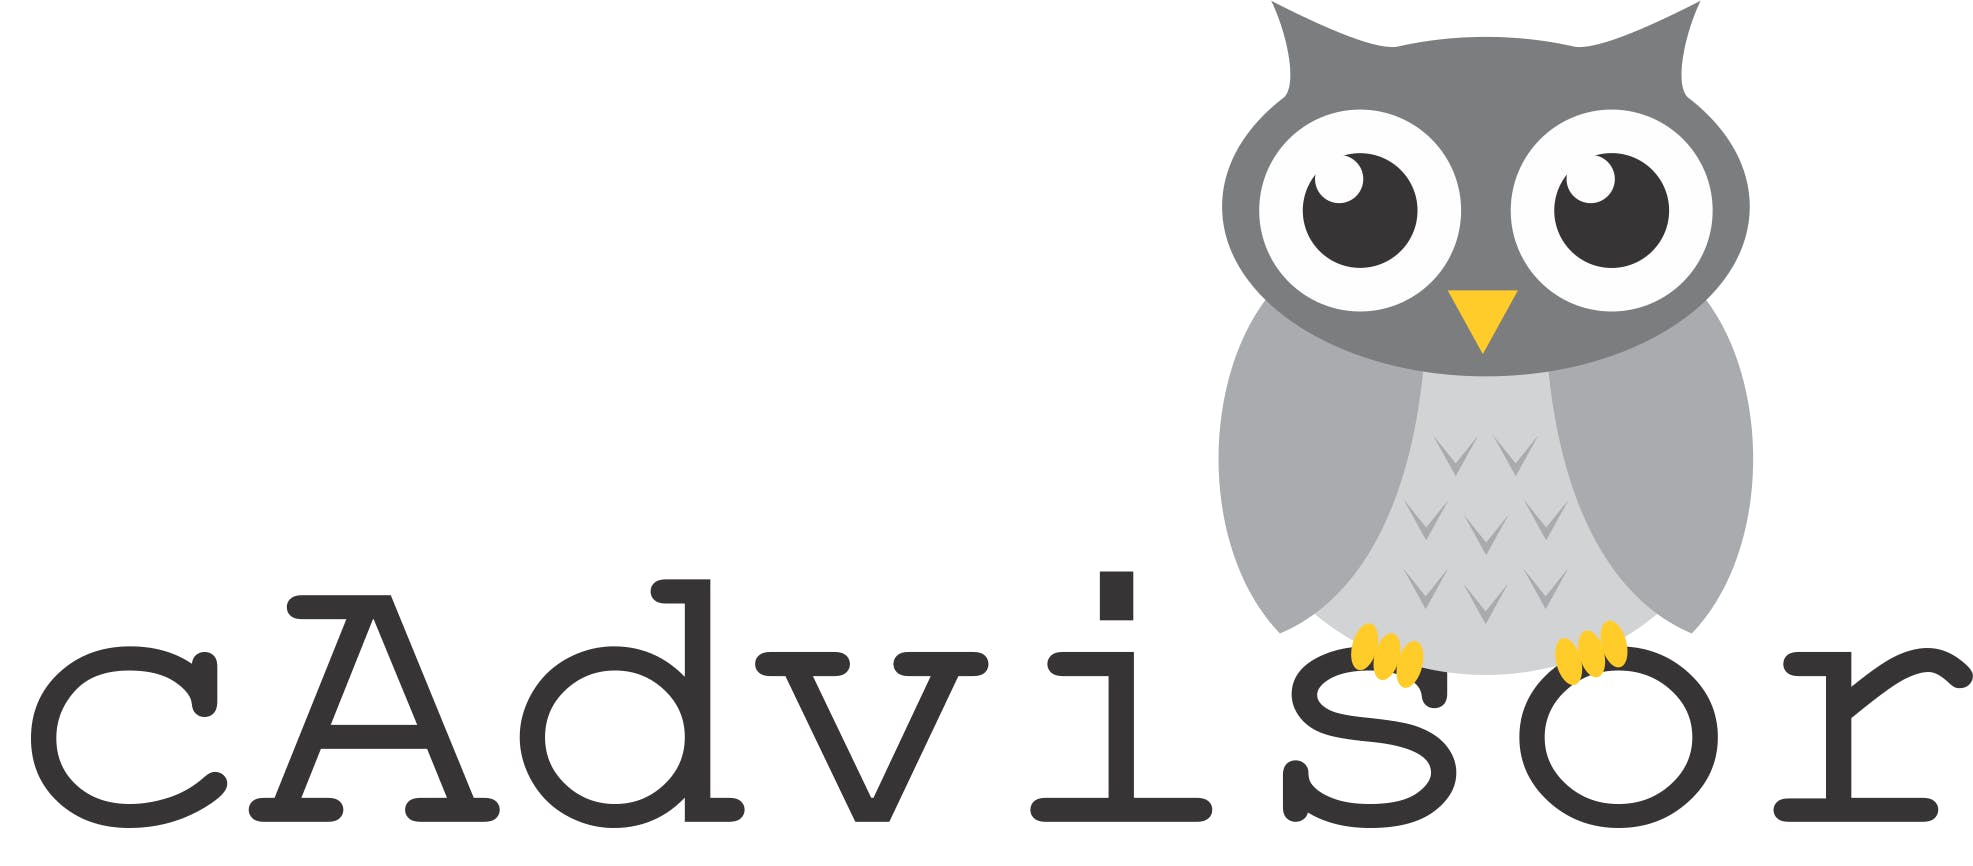 cAdvisor logo